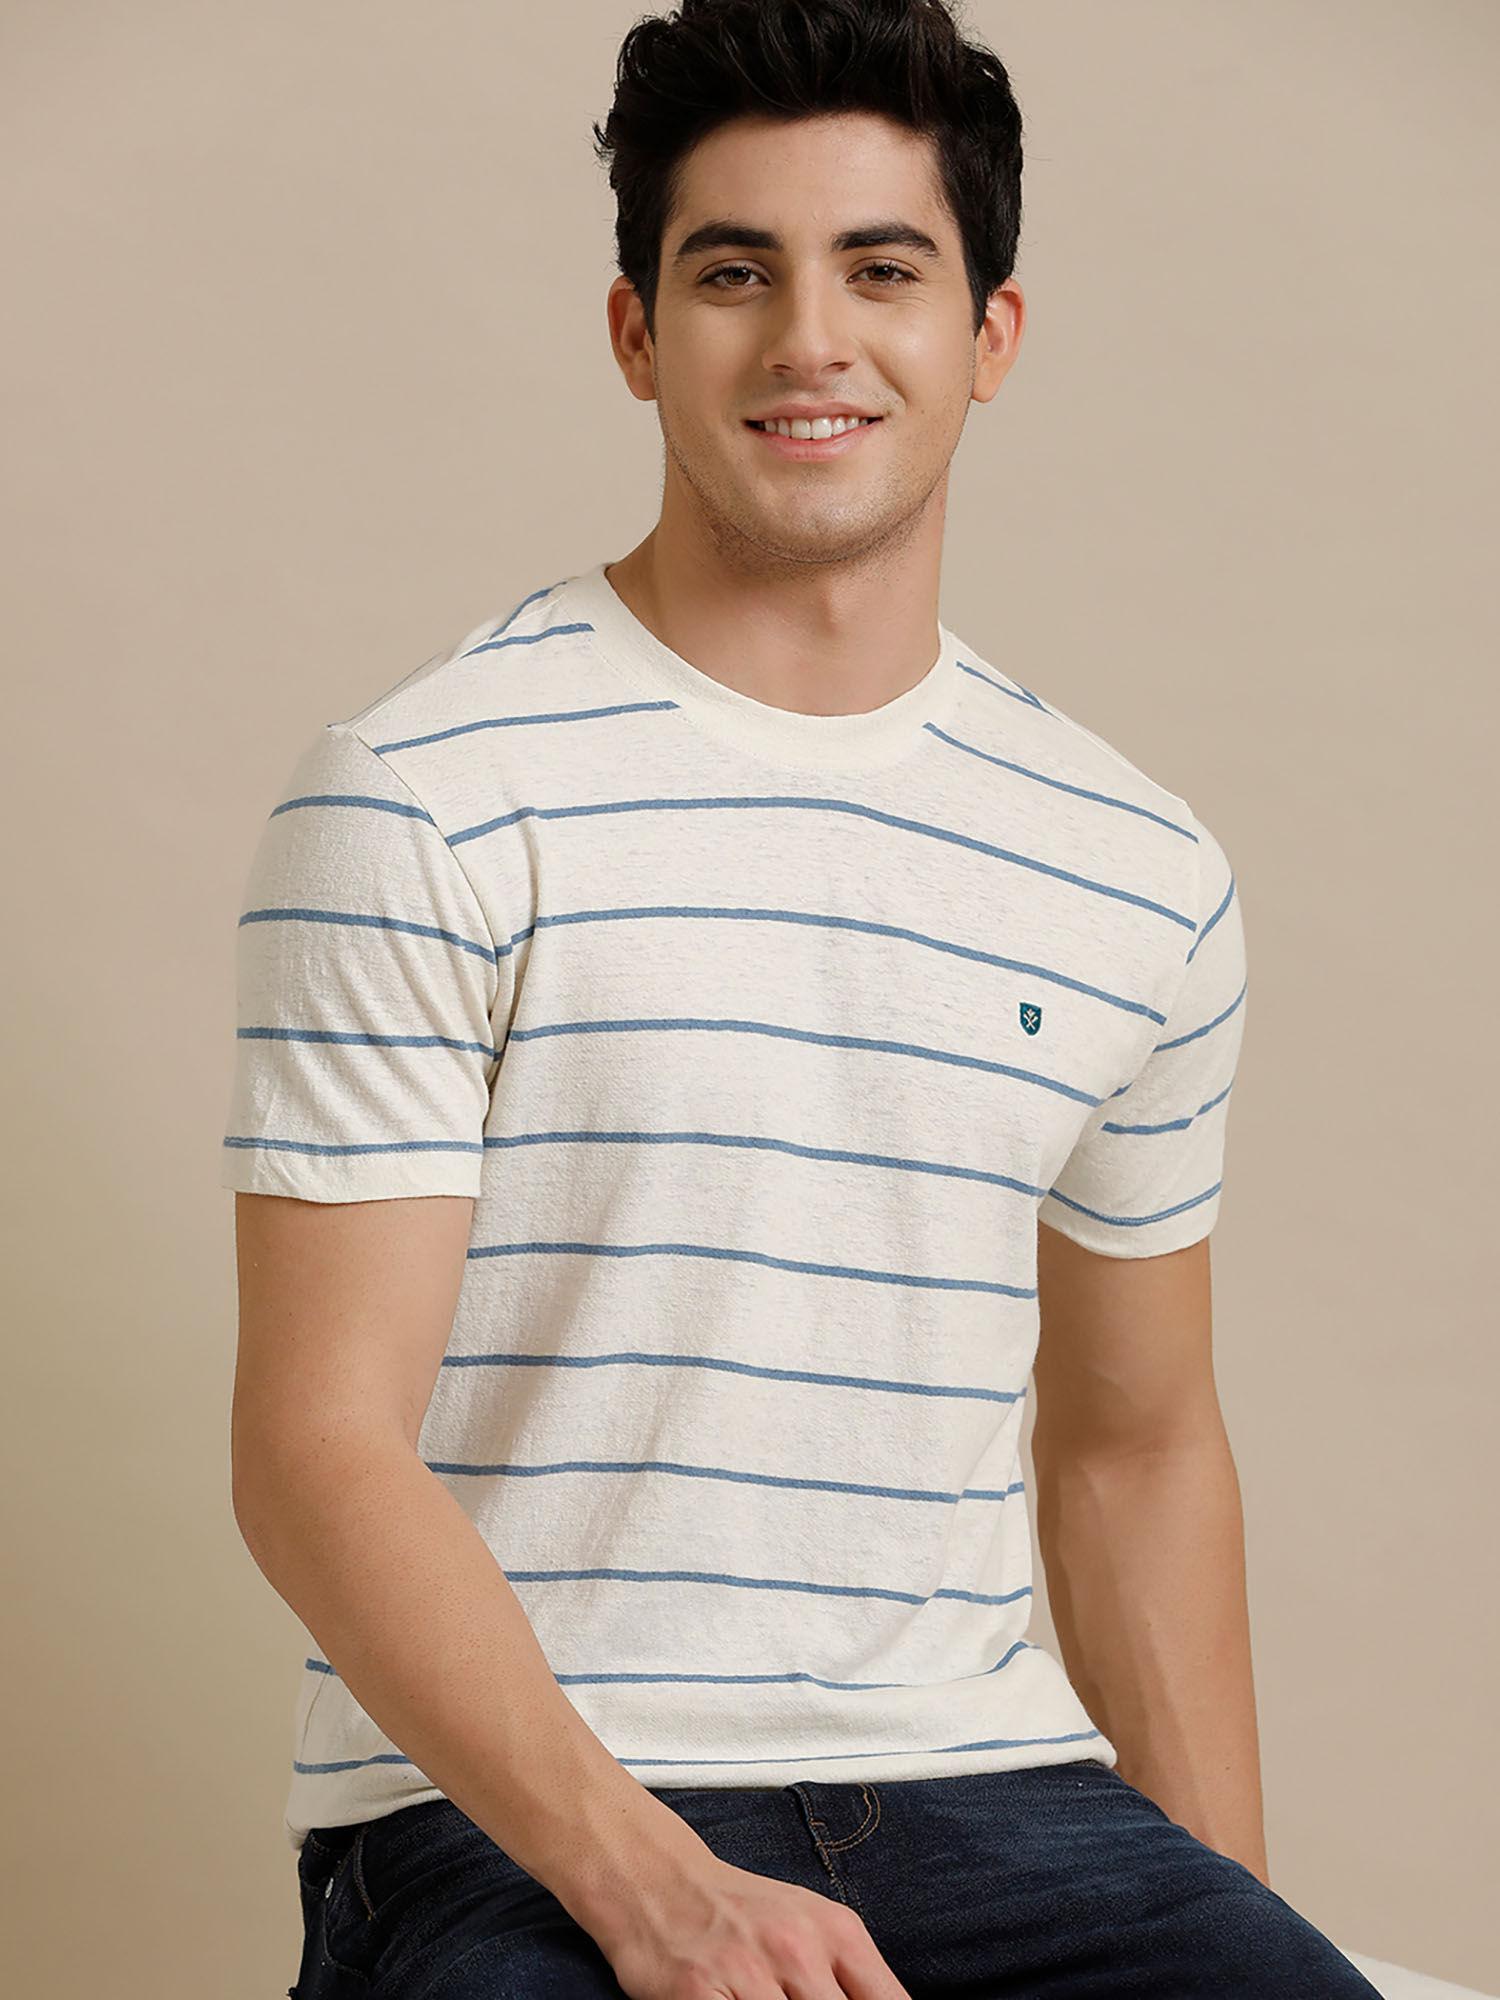 circular knit crew neck blue striped half sleeve t-shirt for men